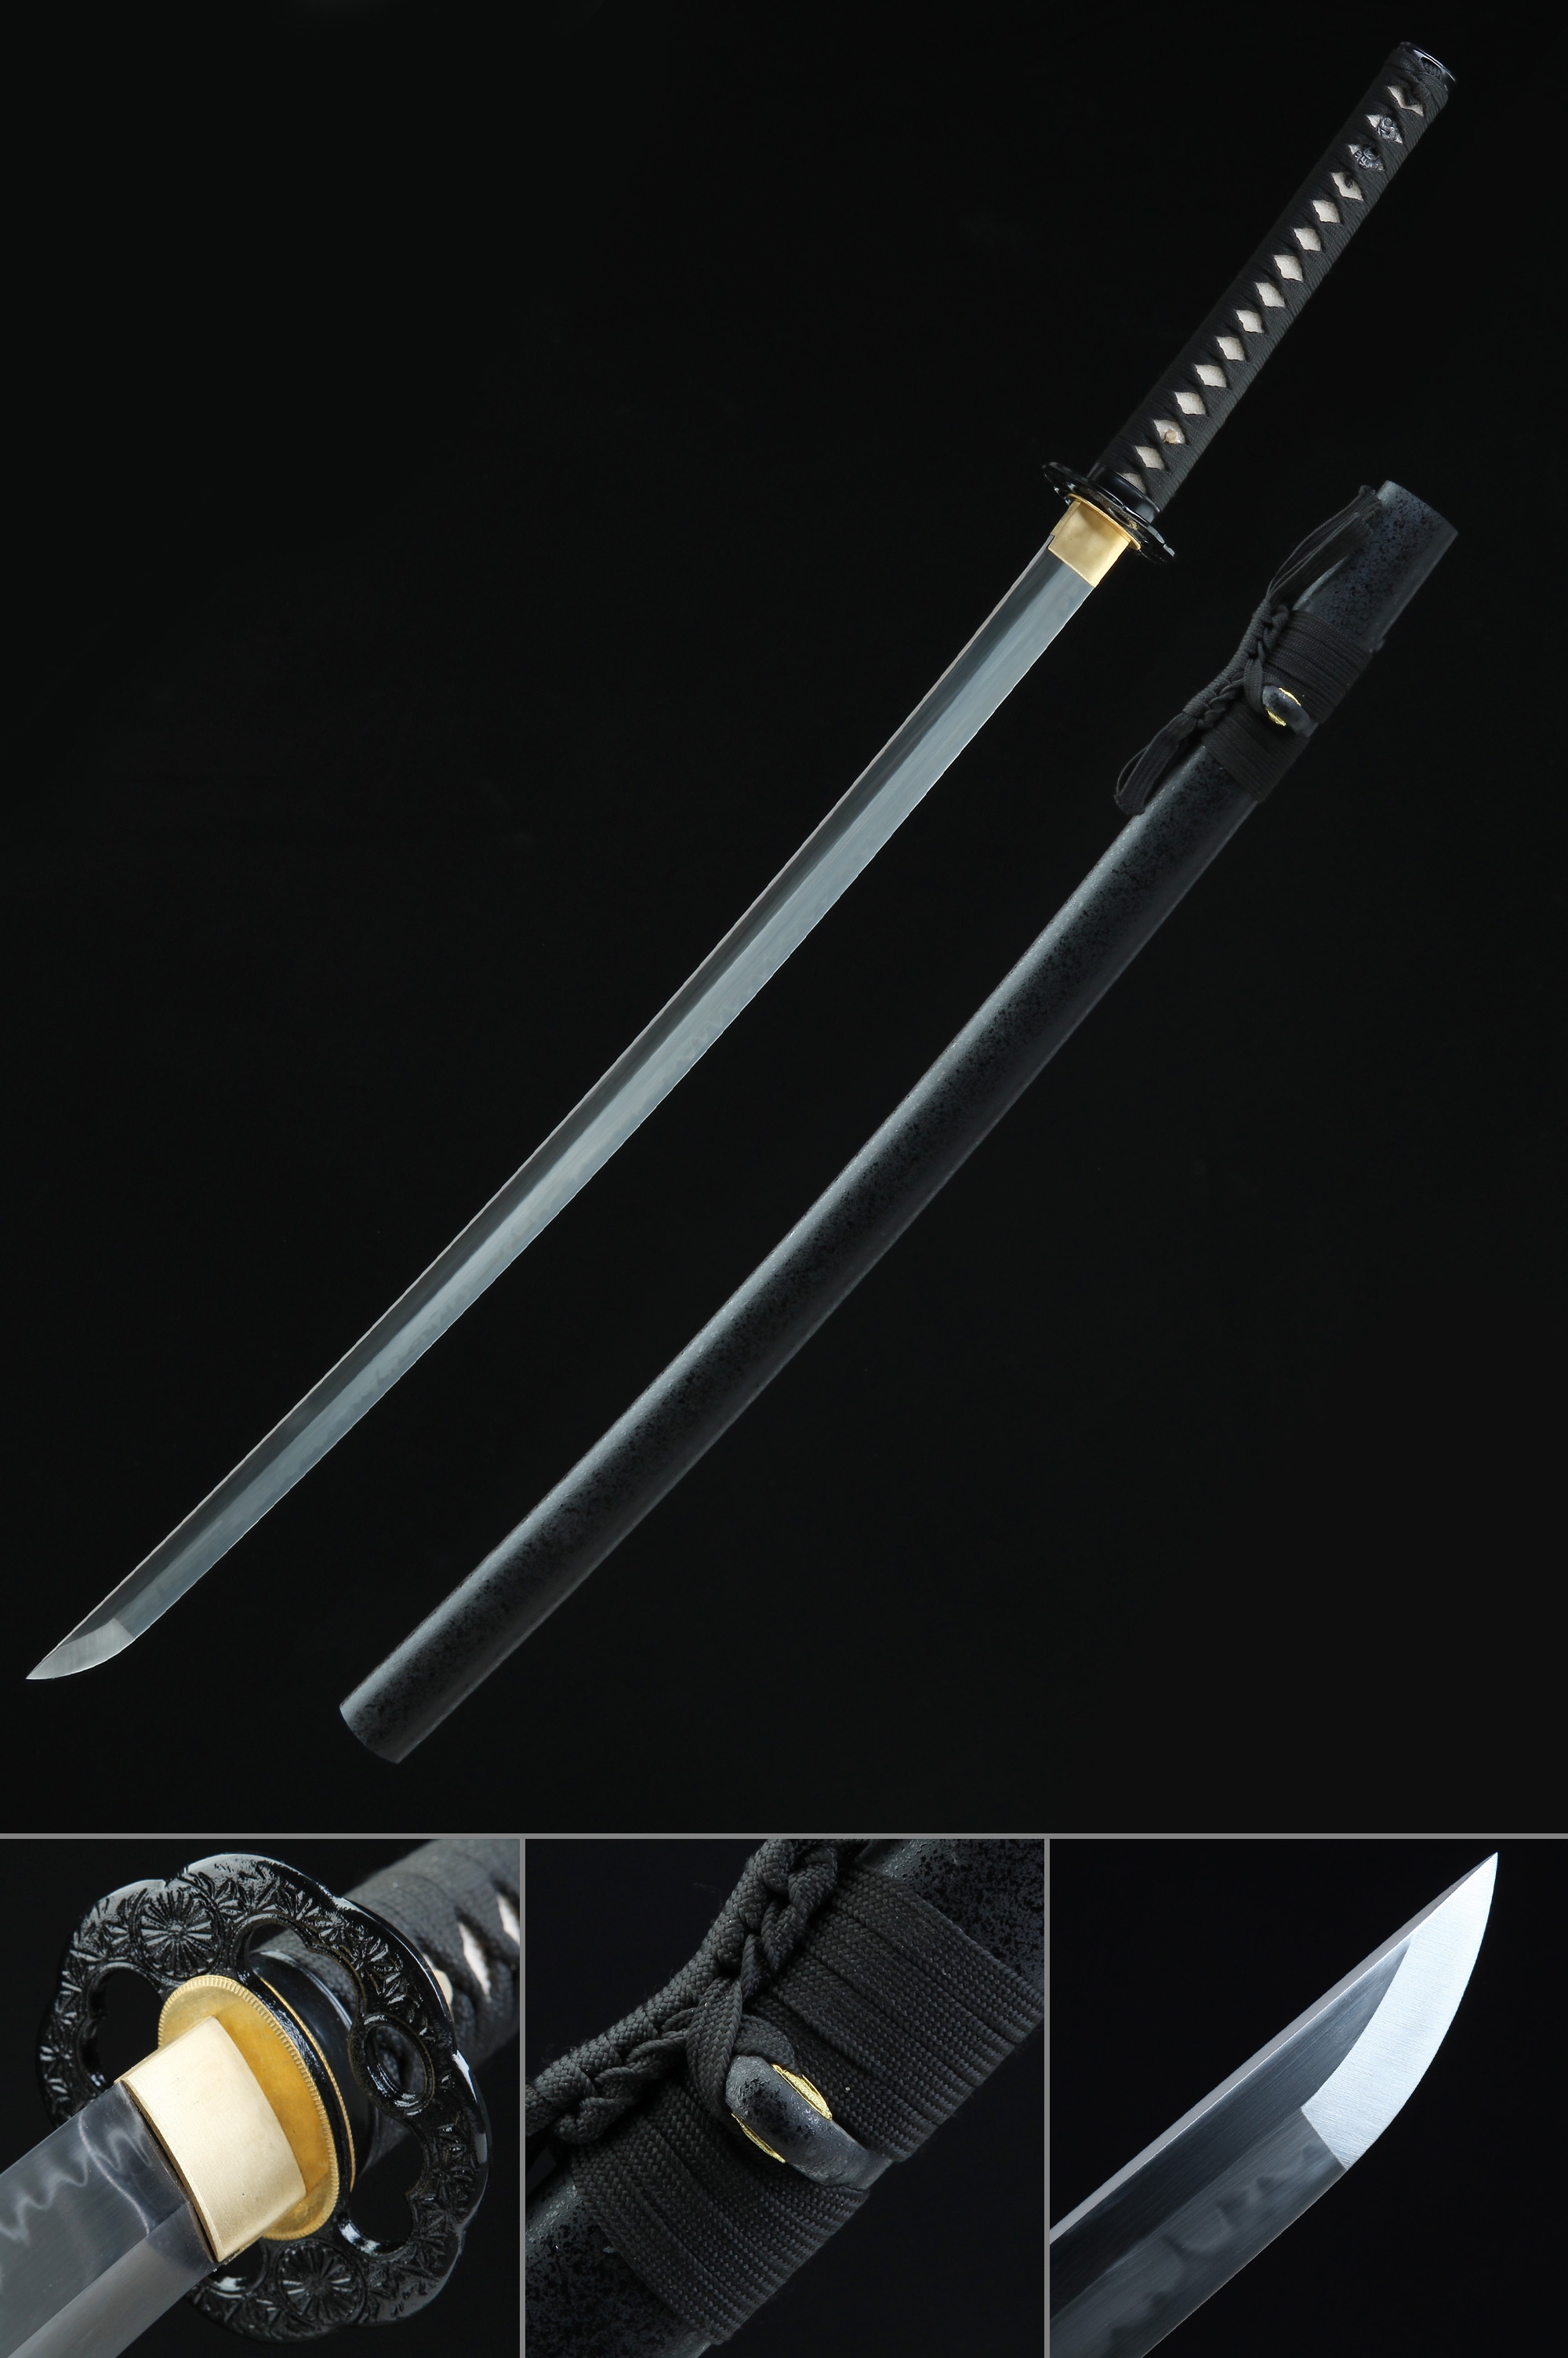 Details about   Hand Forged High Quality Japan Katana Ninj Sect Samurai Sword Sharp Battle Ready 